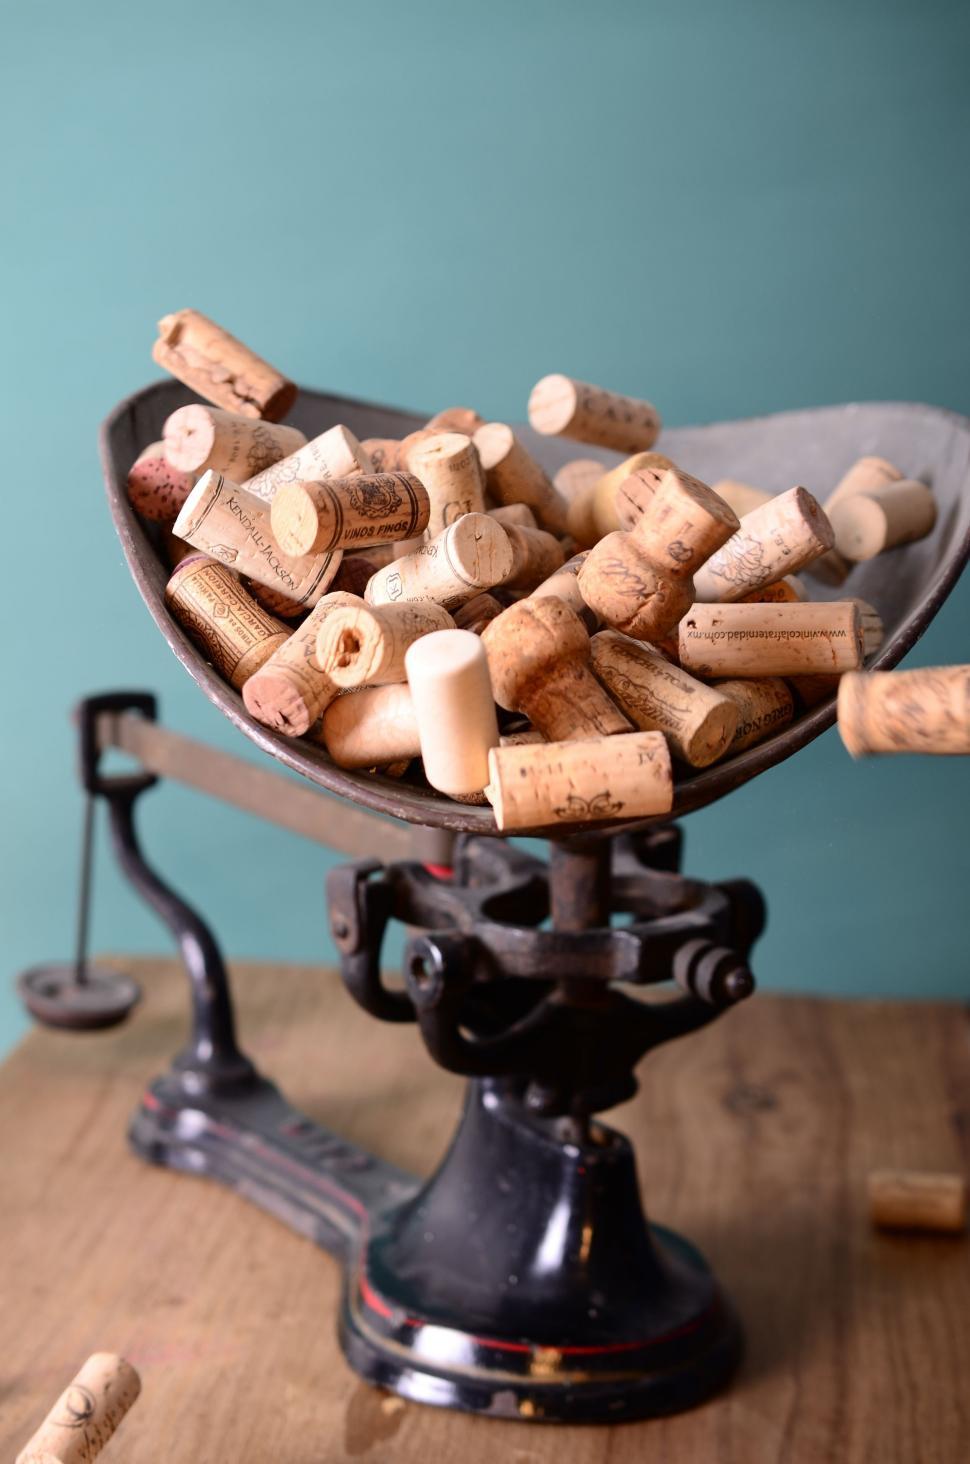 Free Image of Wine Corks  